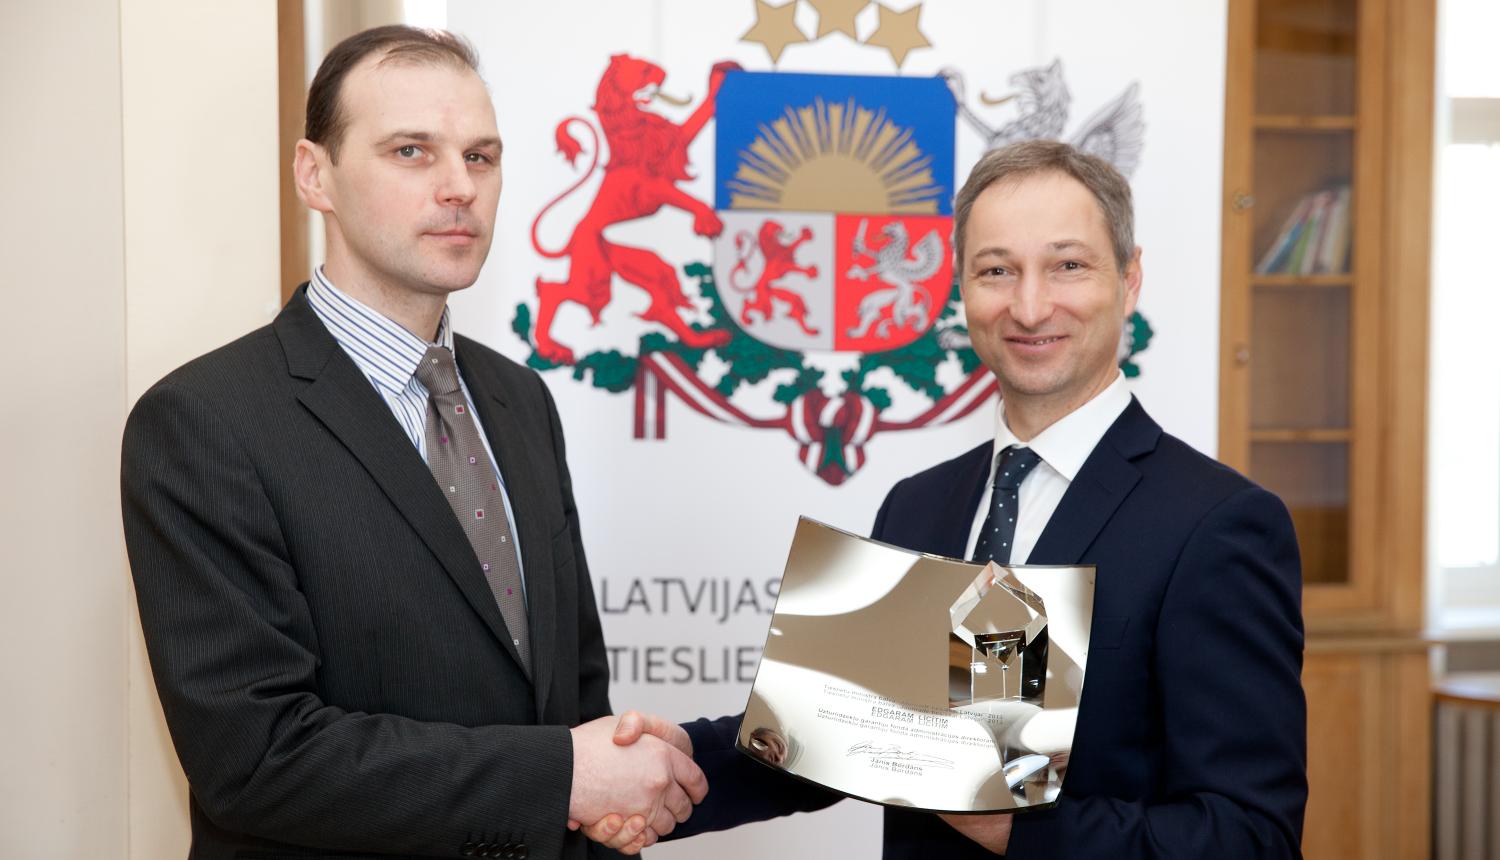 Tieslietu ministrs rīt pasniegs balvu „Jaunrade tiesiskai Latvijai”